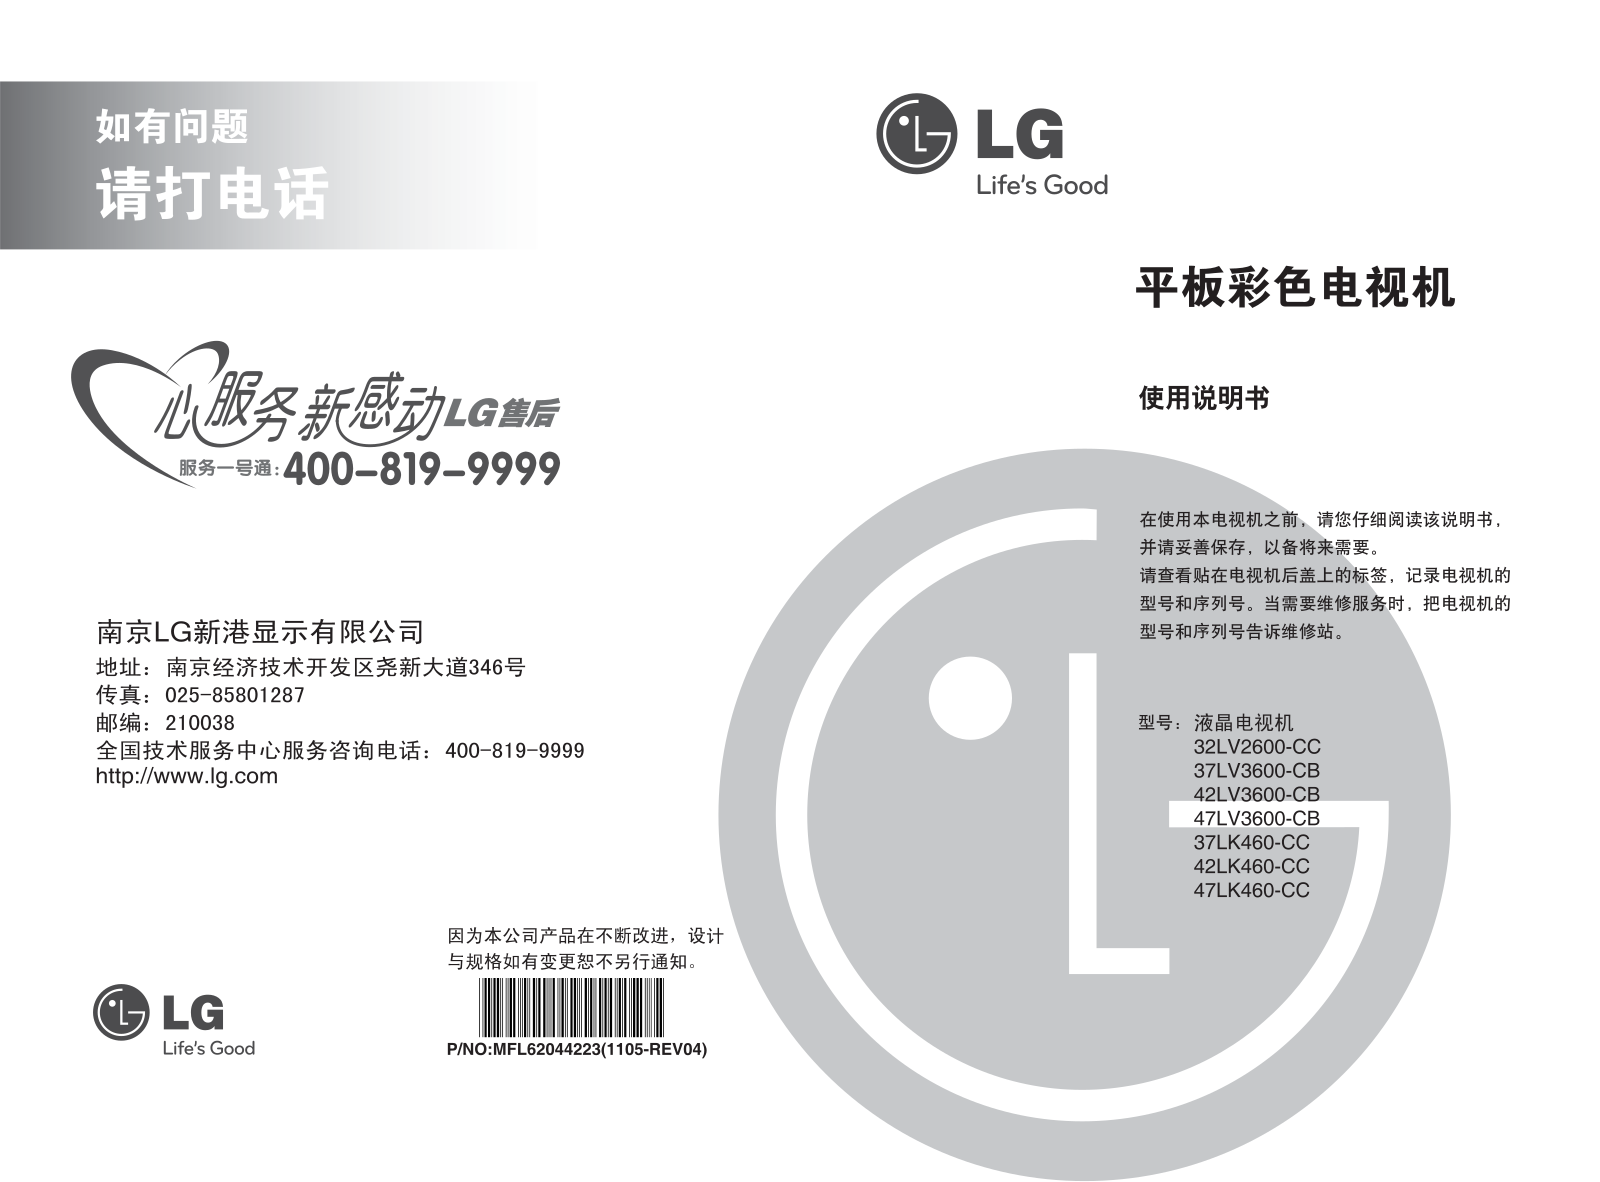 LG 32LV2600-CC, 37LK460-CC Users guide